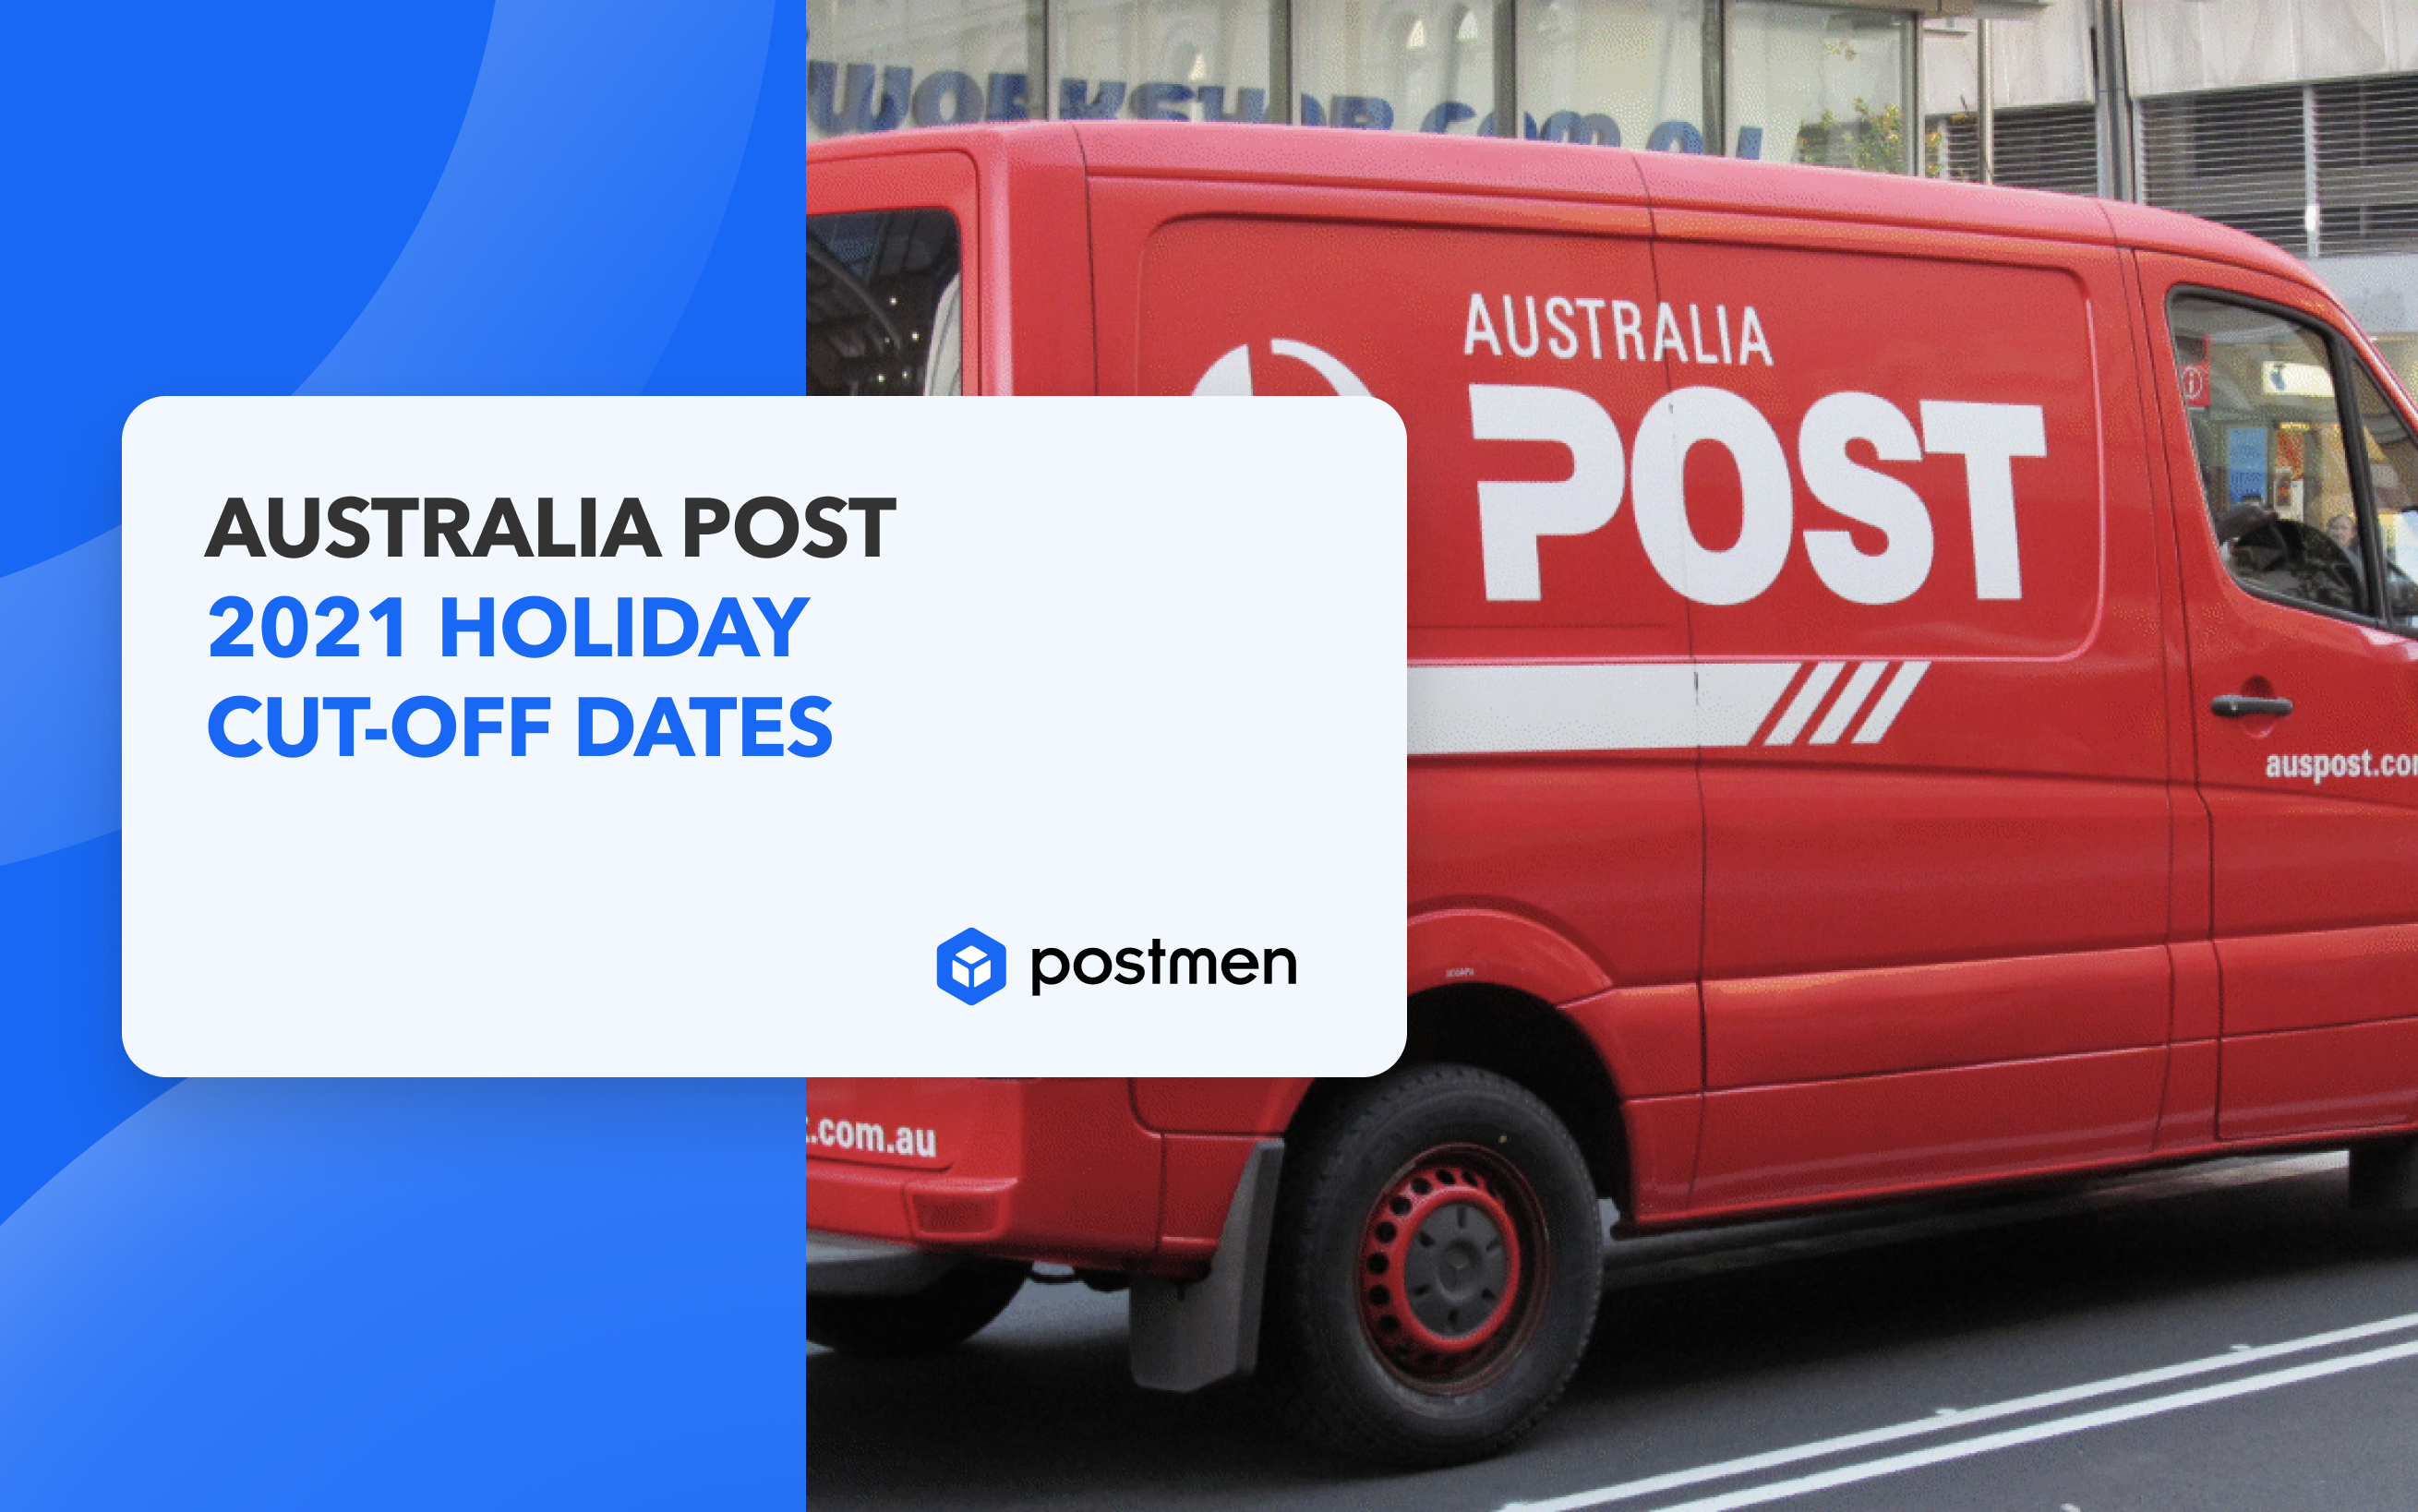 Australia Post announces its 2021 Holiday Cut-off dates